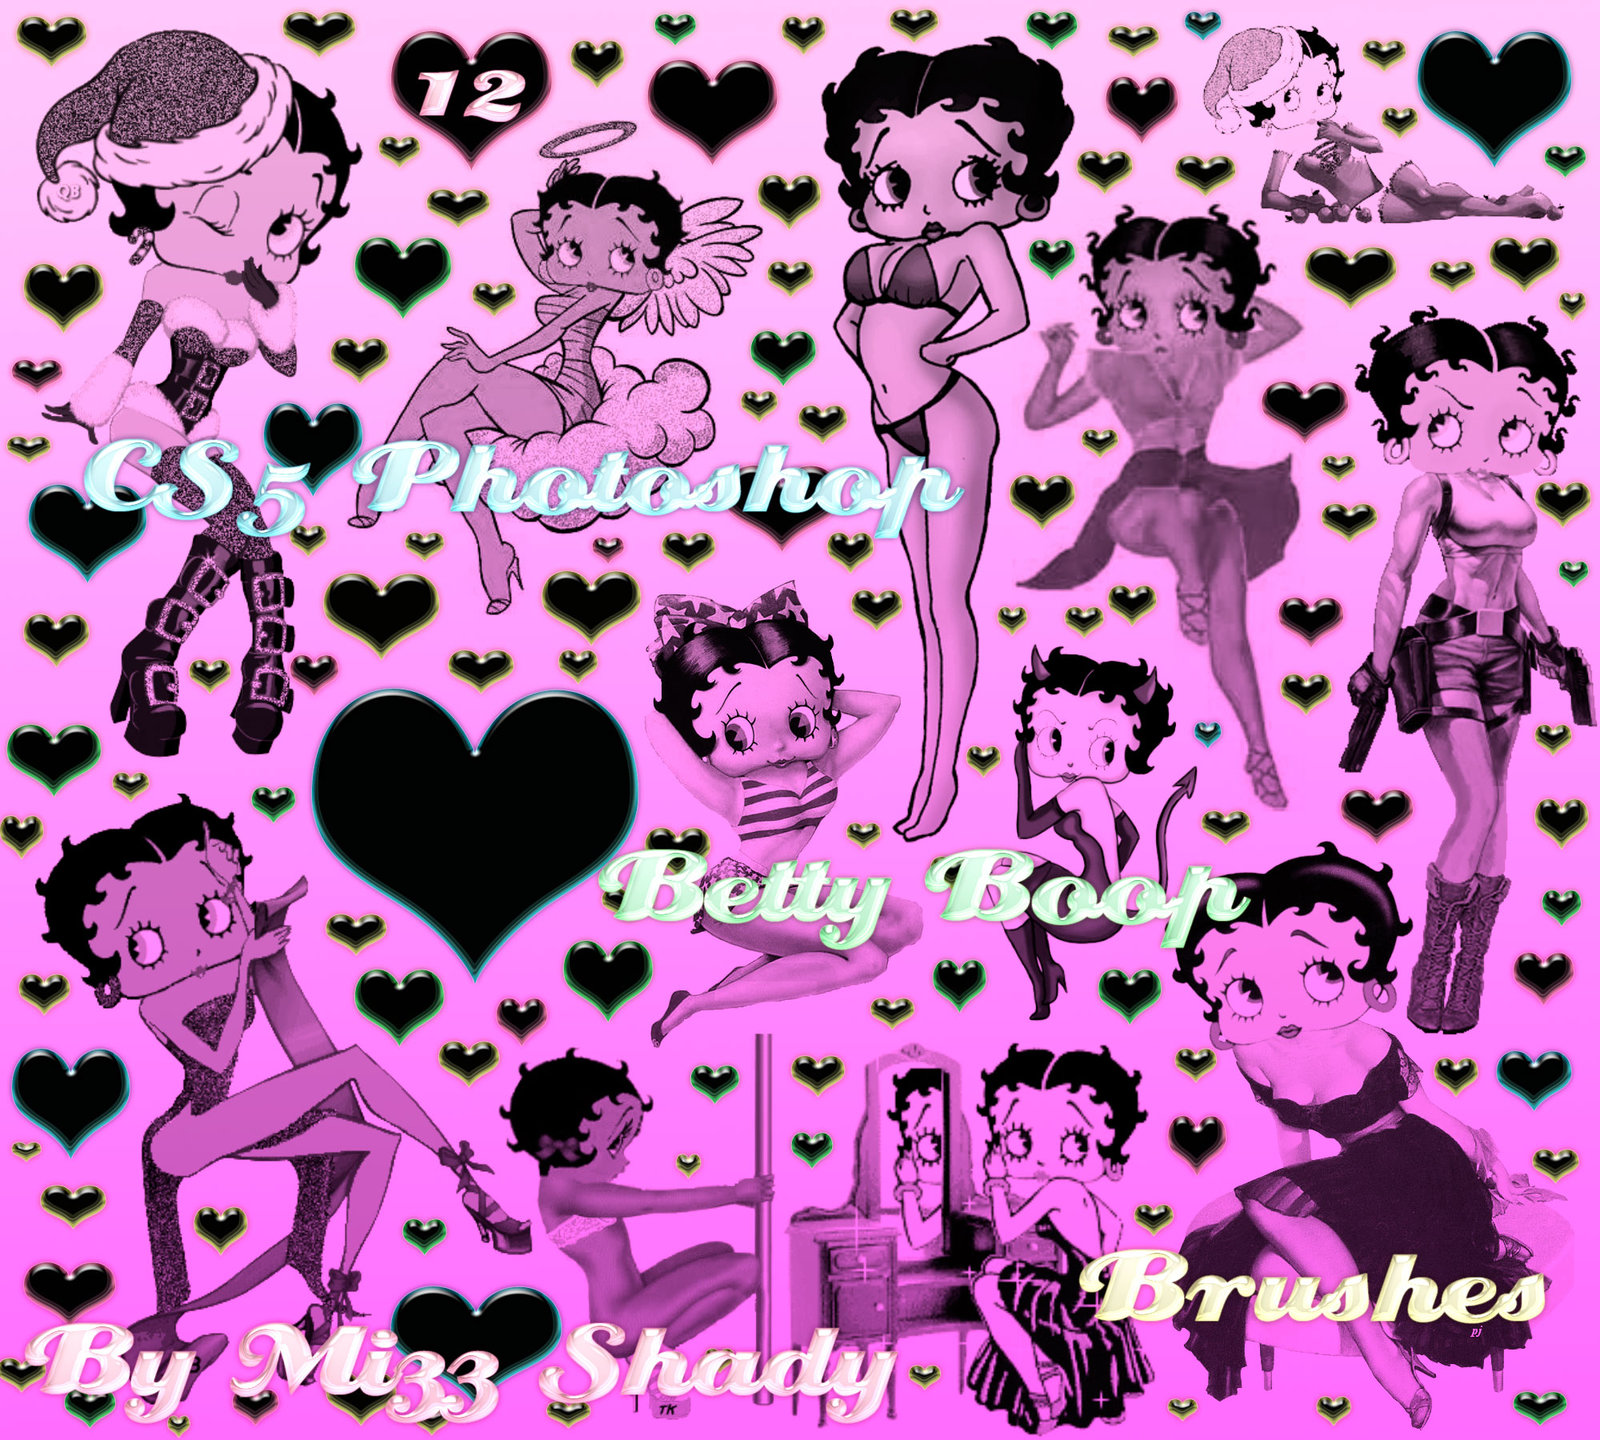 12 photoshop Betty Boop Brushes by MizzShady on DeviantArt